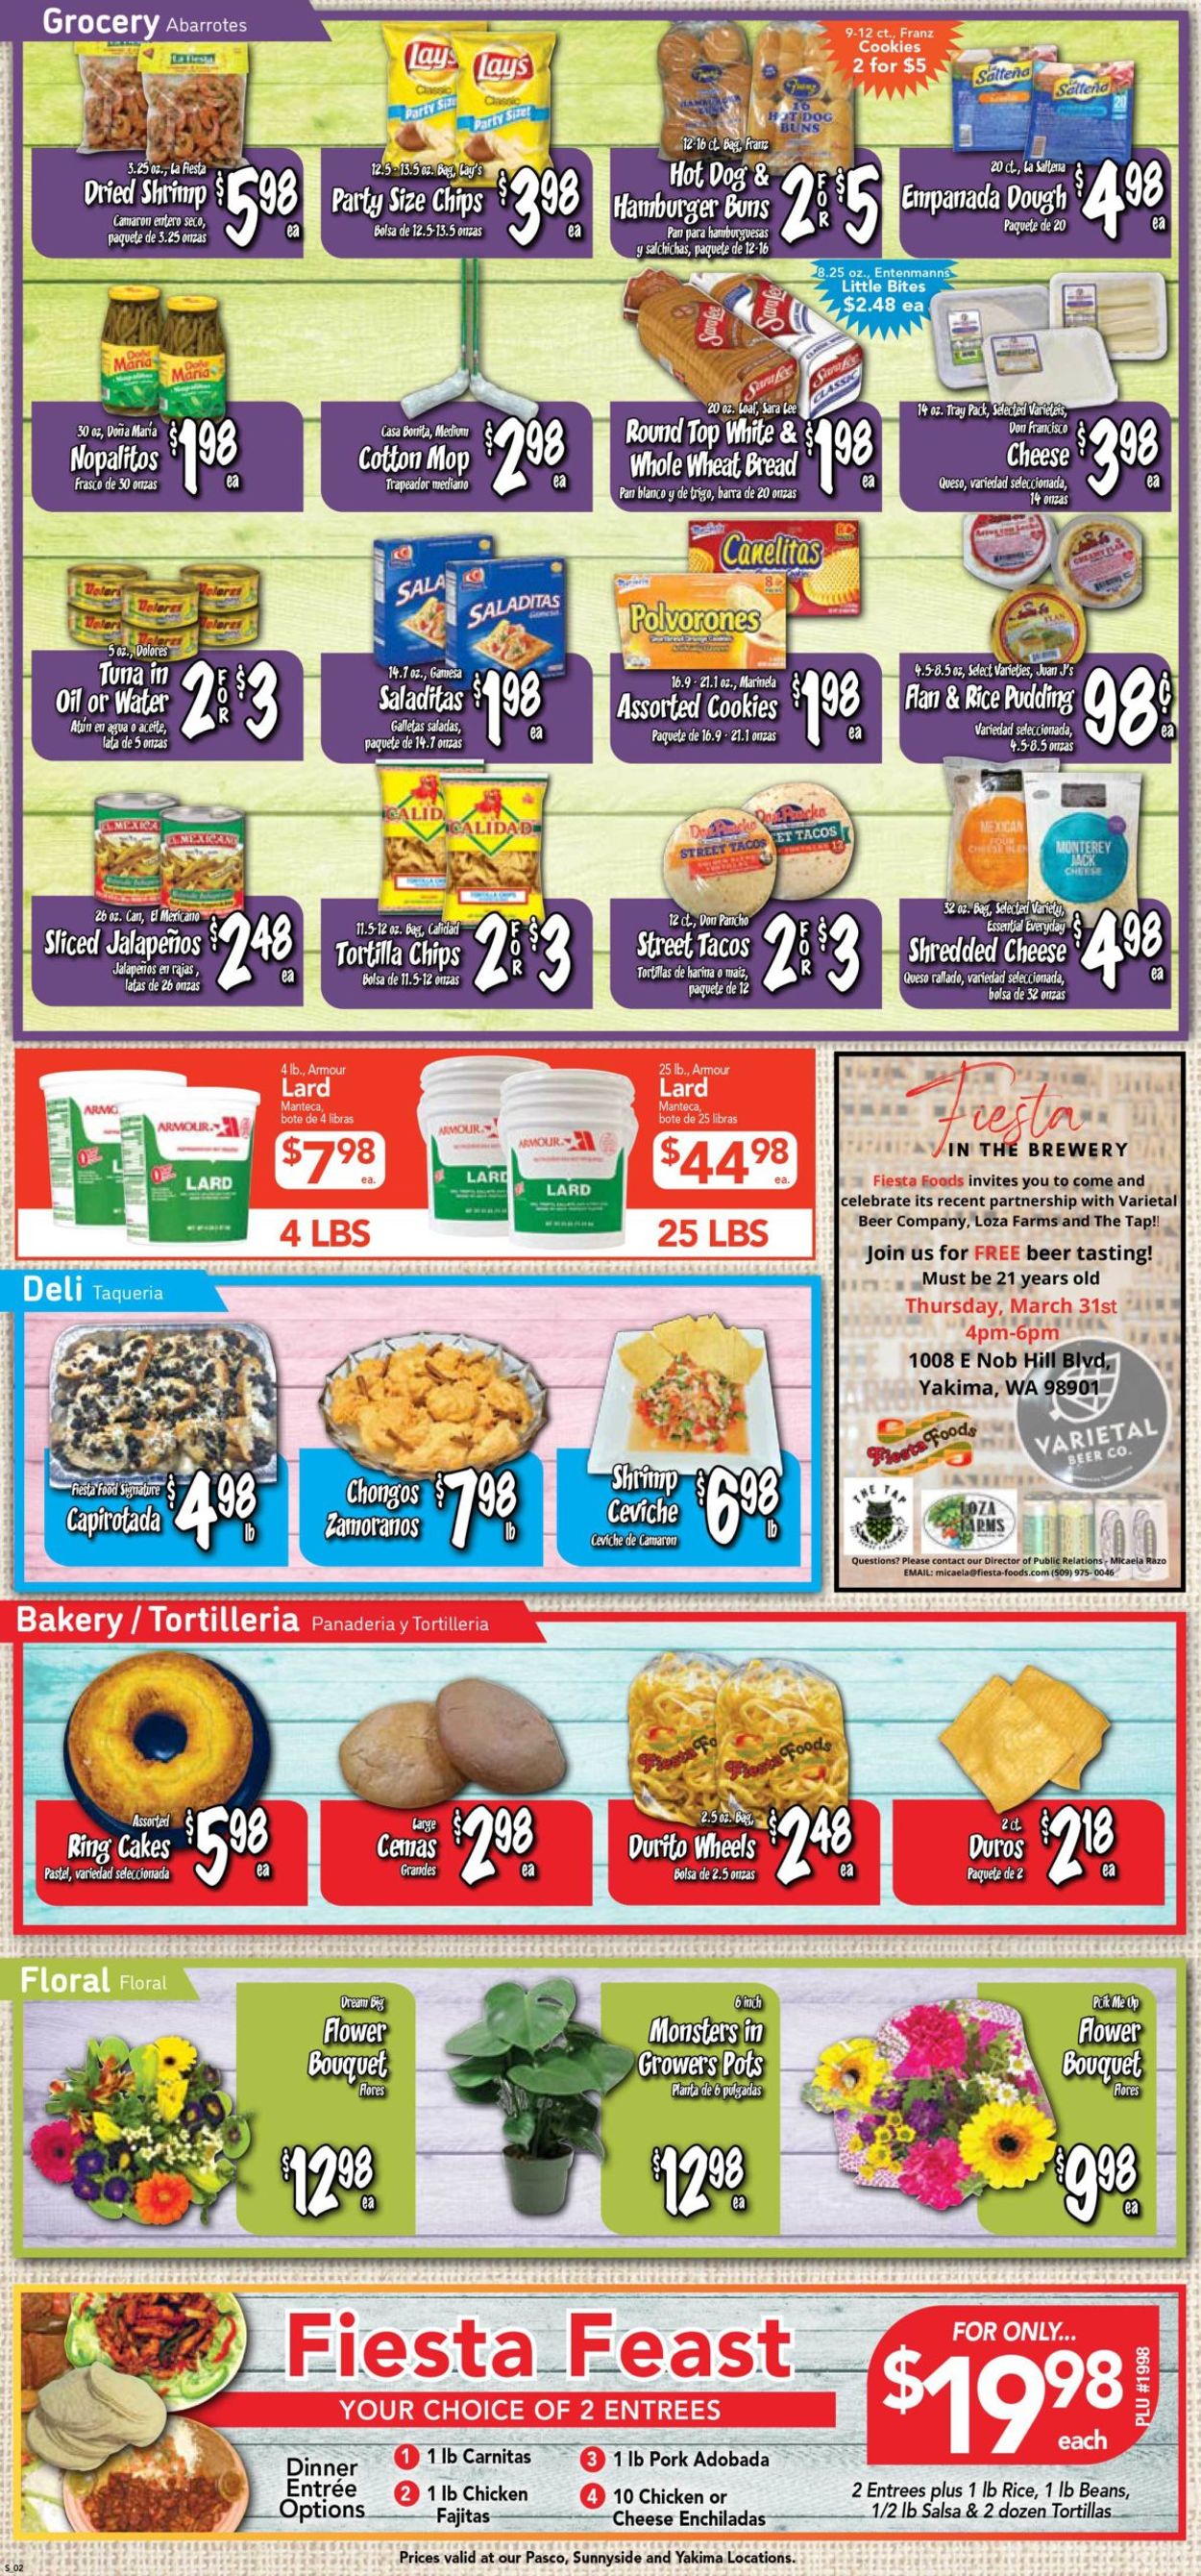 Catalogue Fiesta Foods SuperMarkets from 03/23/2022